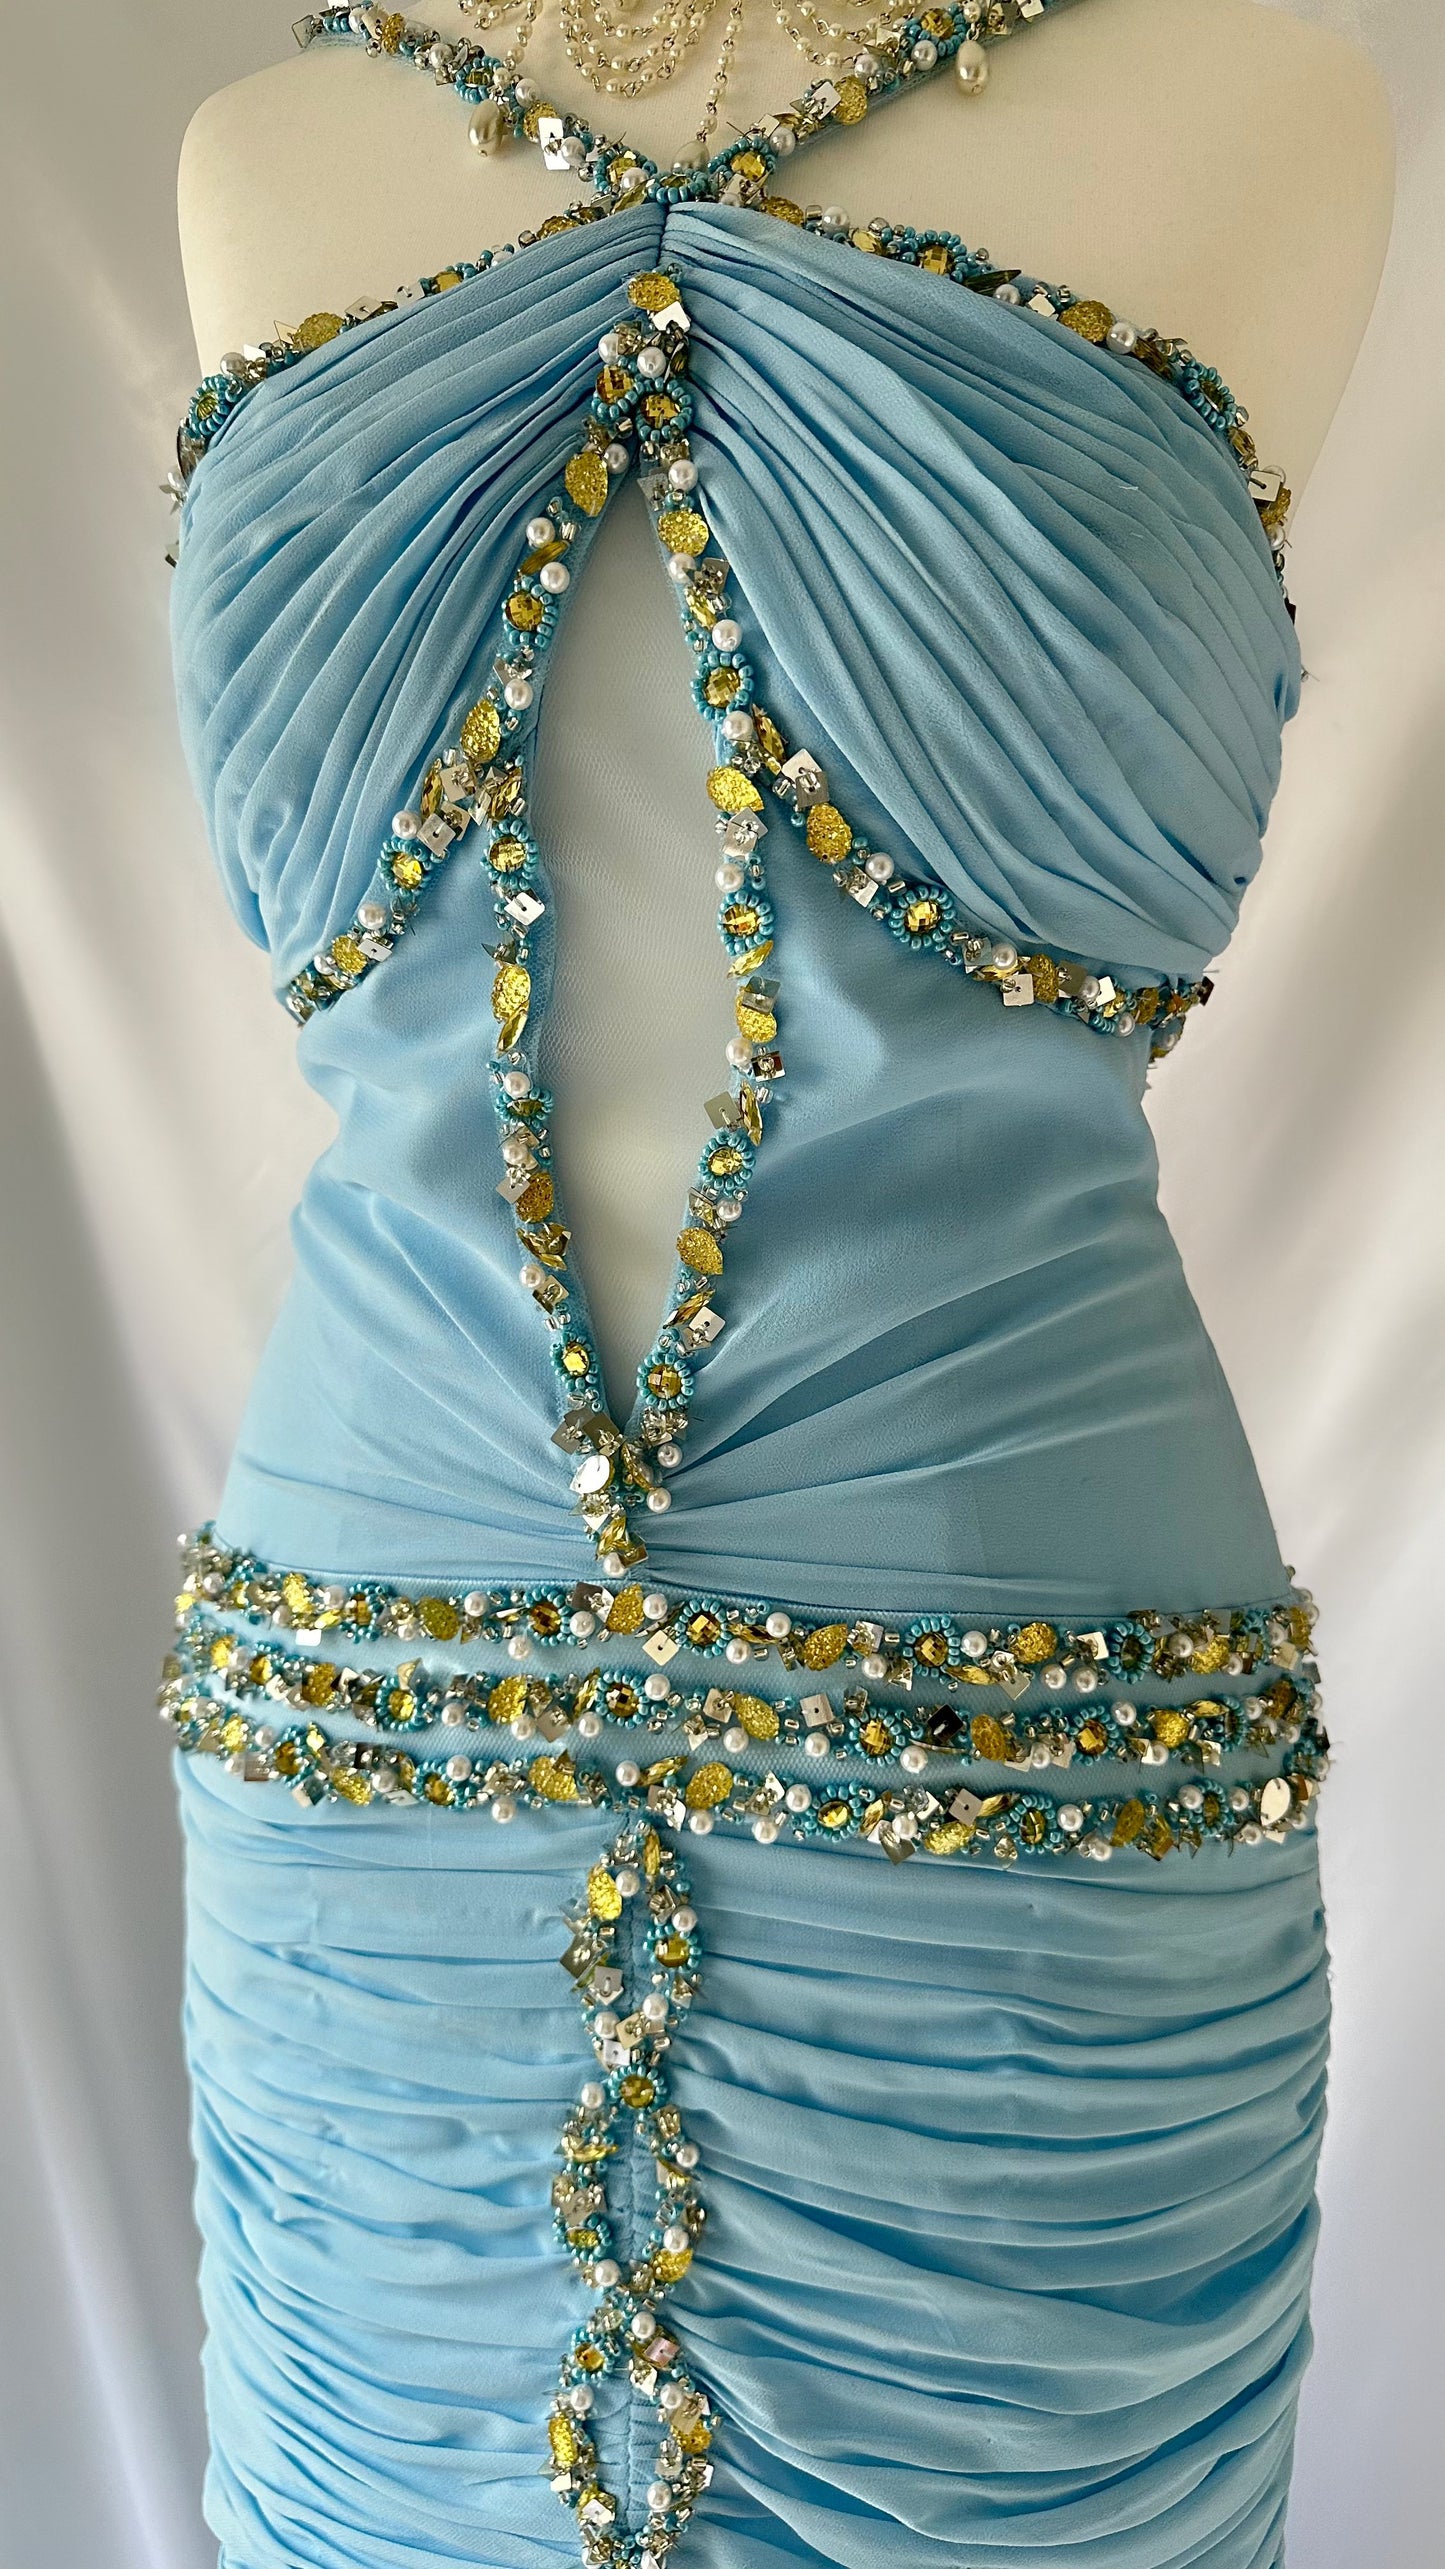 Gorgeous Vintage Baby Blue Embellished Key-Hole Gown